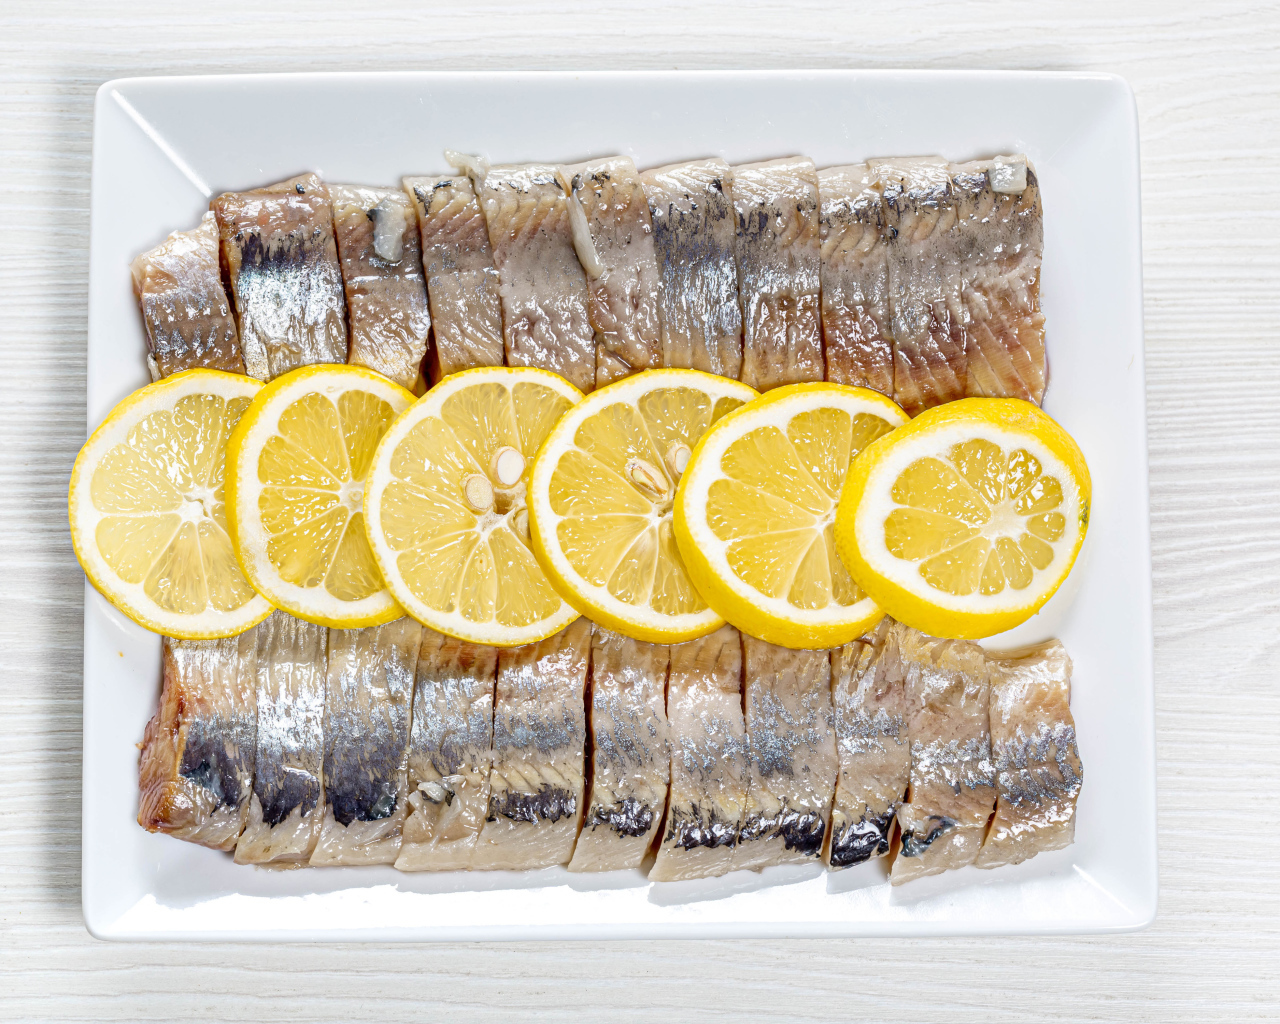 Sliced herring on a white plate with lemon